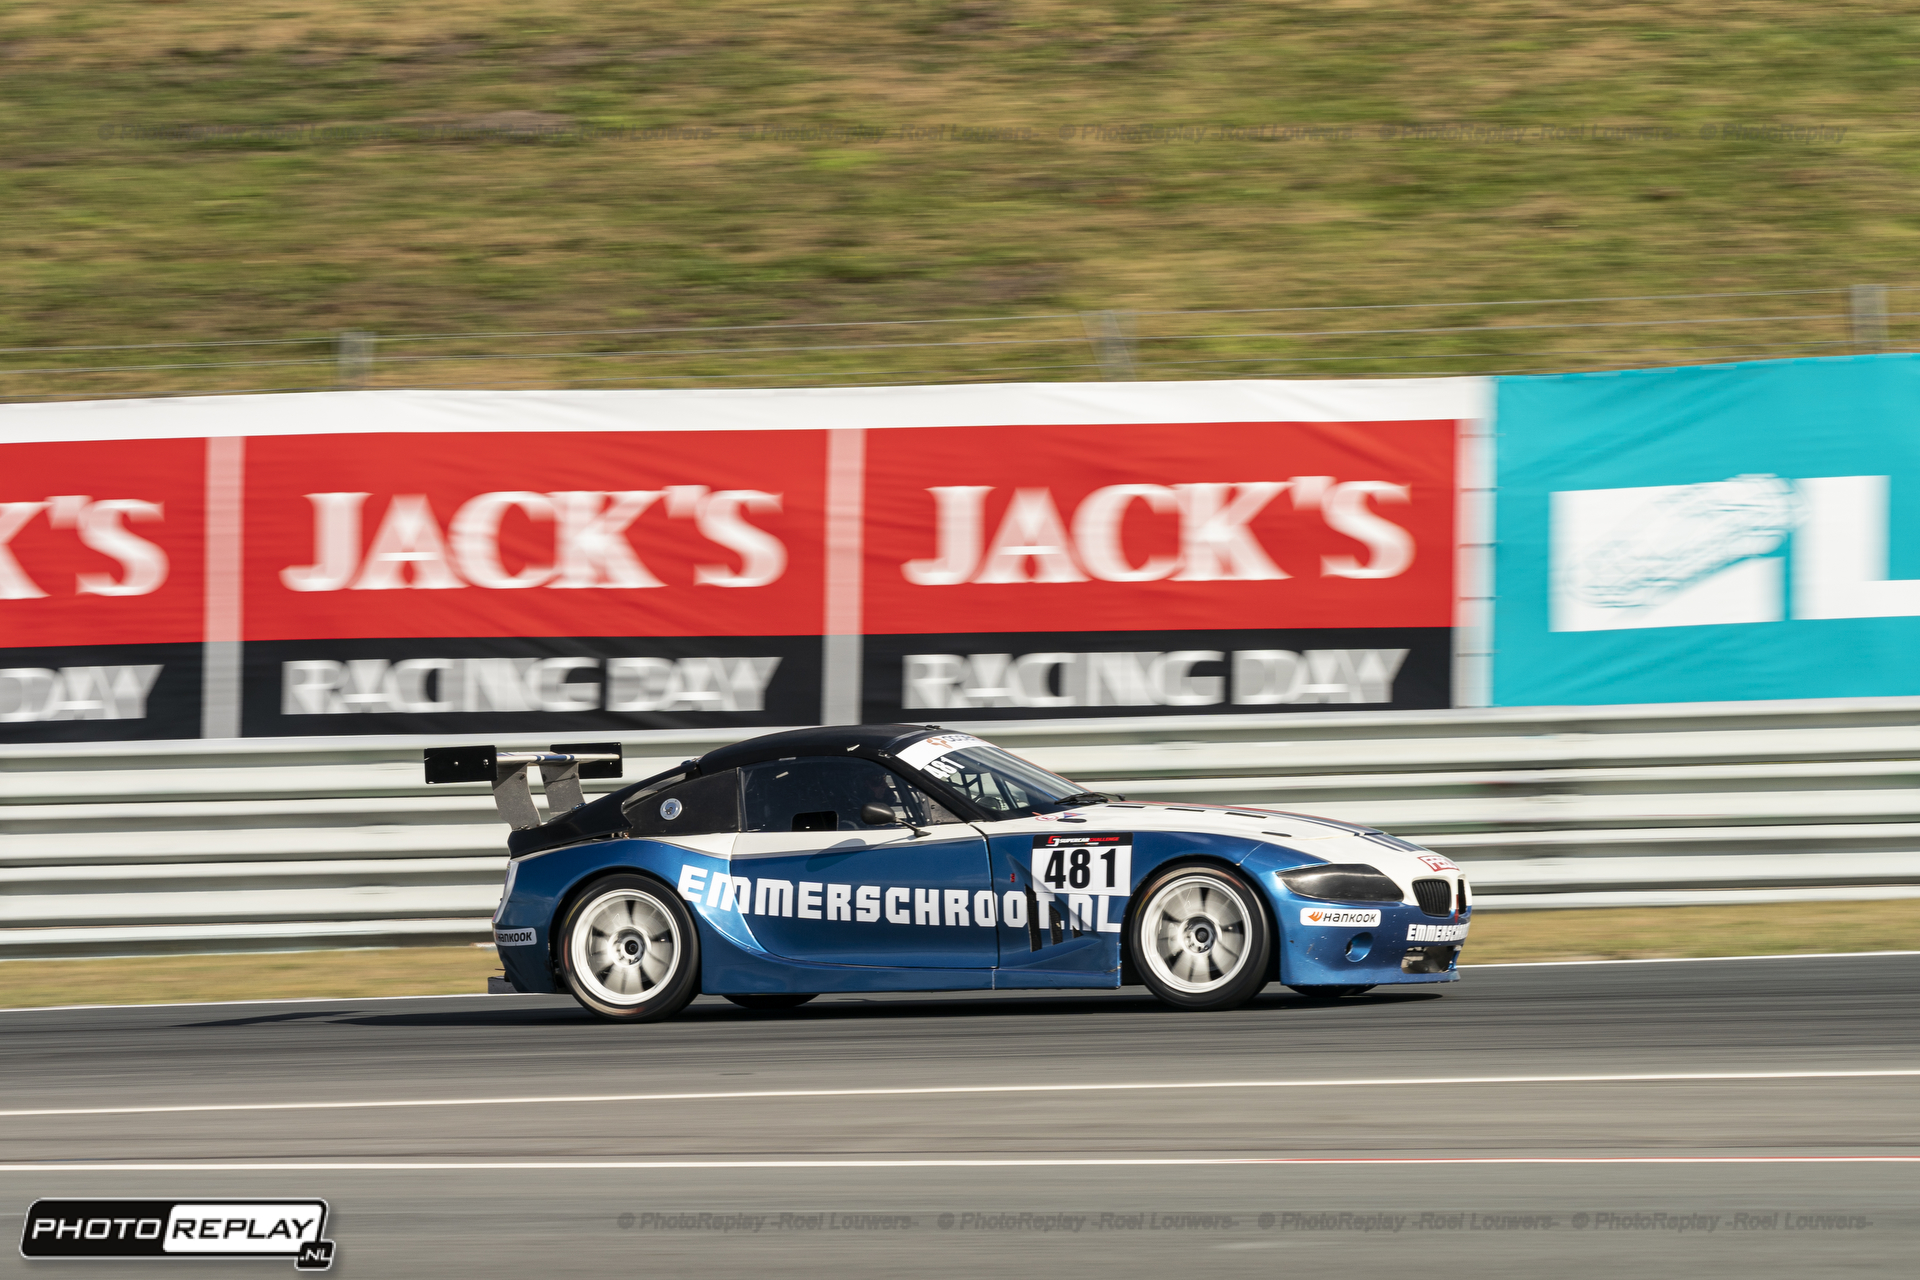 05/08/2022: Jack's Racing Day, TT-Circuit Assen (NL)
Photo: 2022 © Roel Louwers